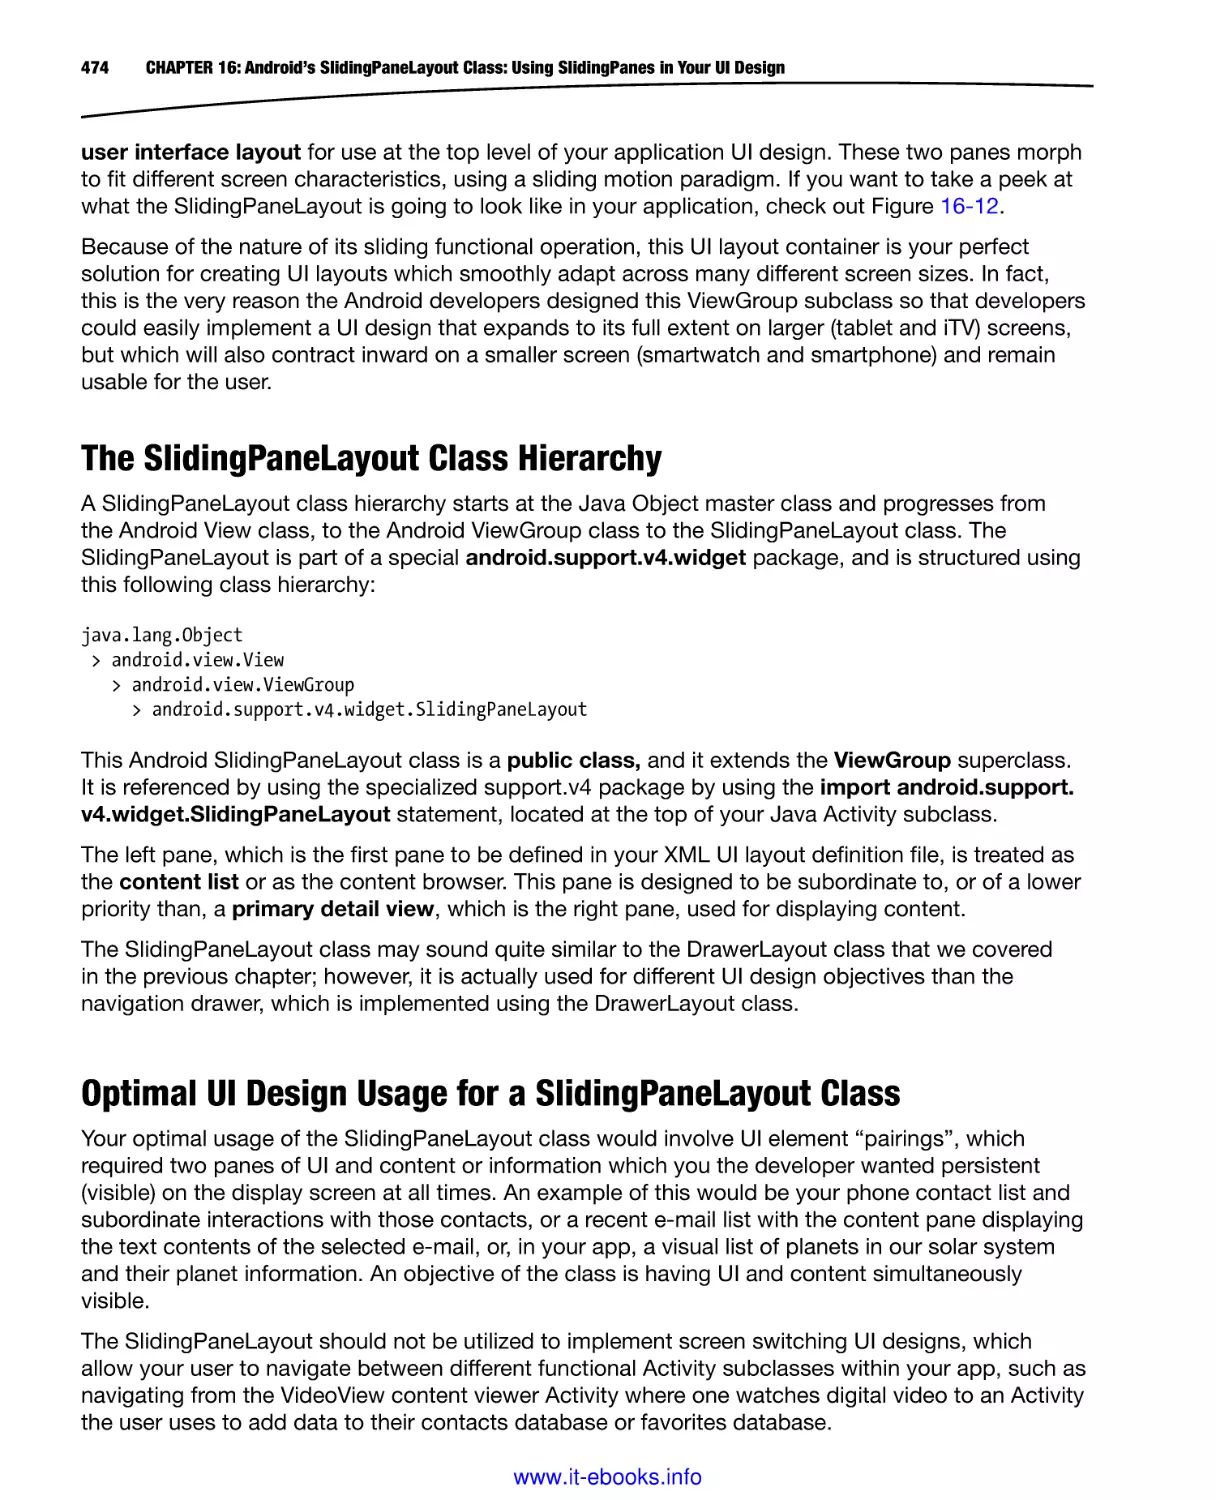 The SlidingPaneLayout Class Hierarchy
Optimal UI Design Usage for a SlidingPaneLayout Class